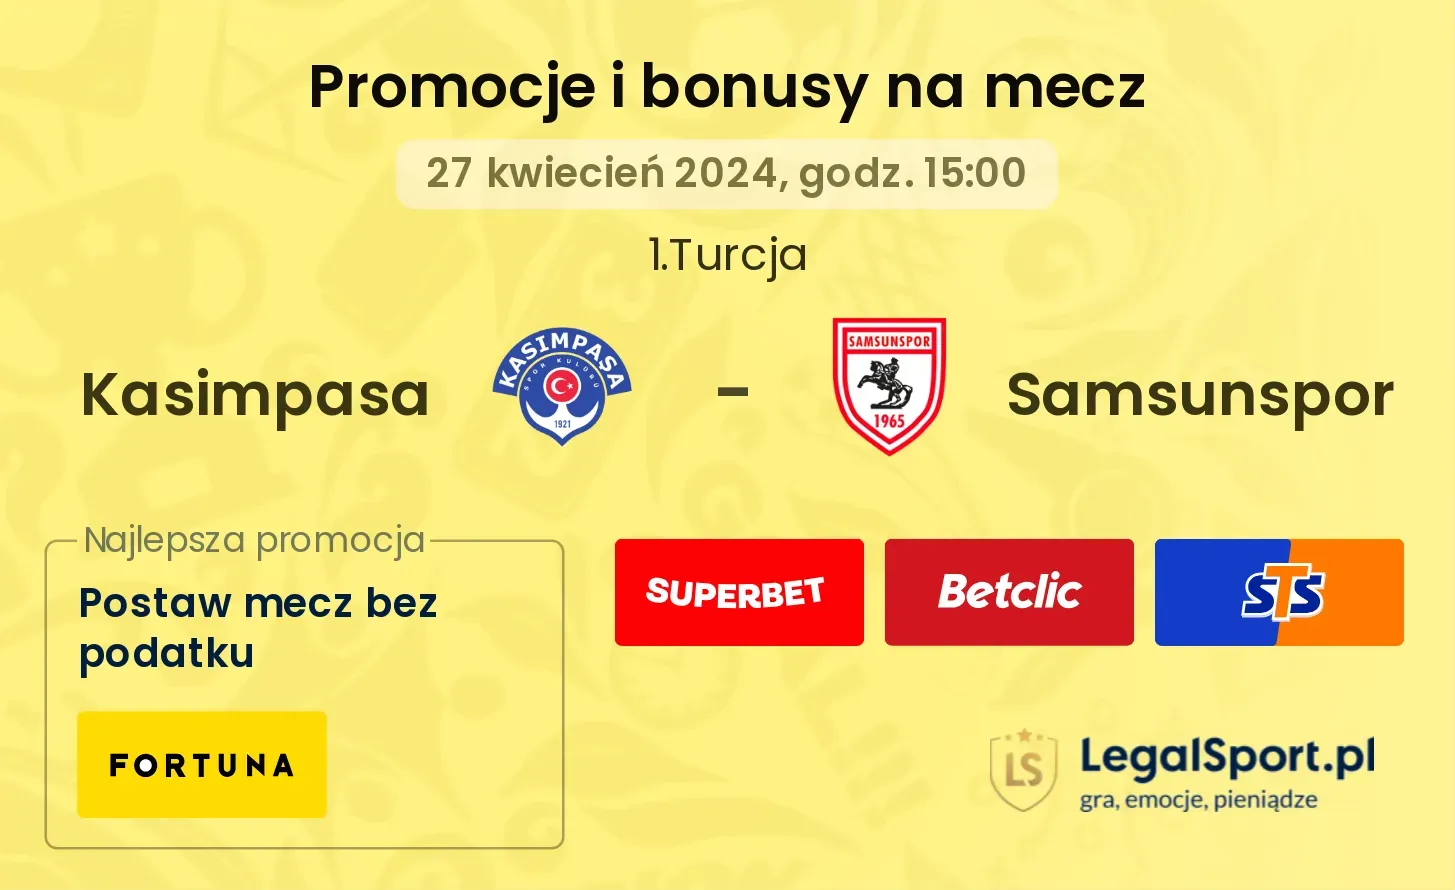 Kasimpasa - Samsunspor promocje bonusy na mecz